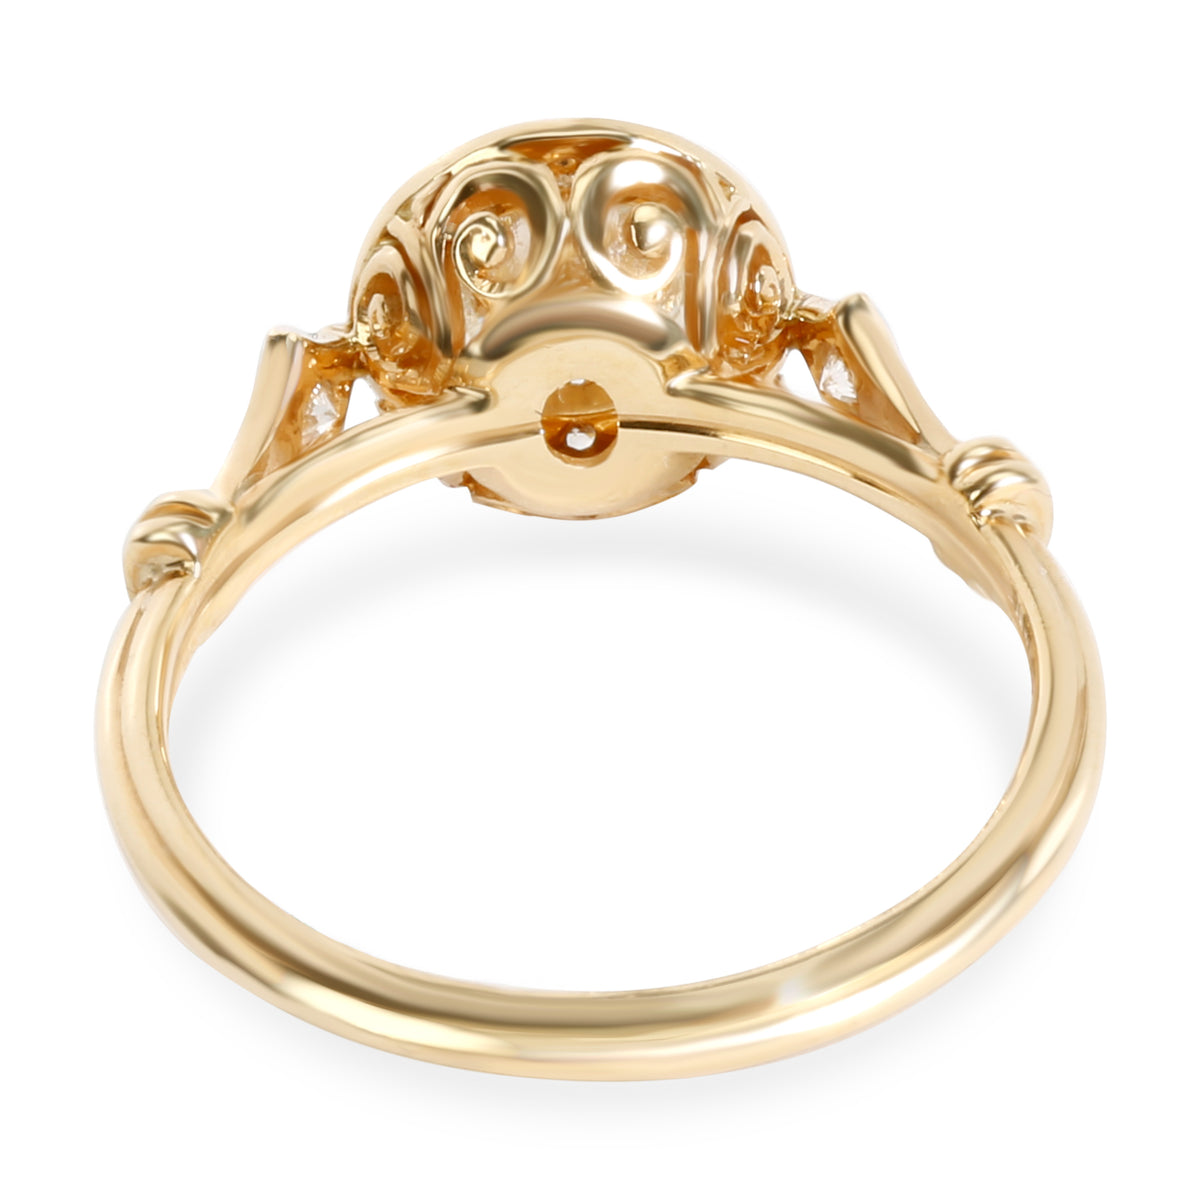 Heidi Diamond Engagement Ring in 18K Yellow Gold K-L VS 1.18 CTW